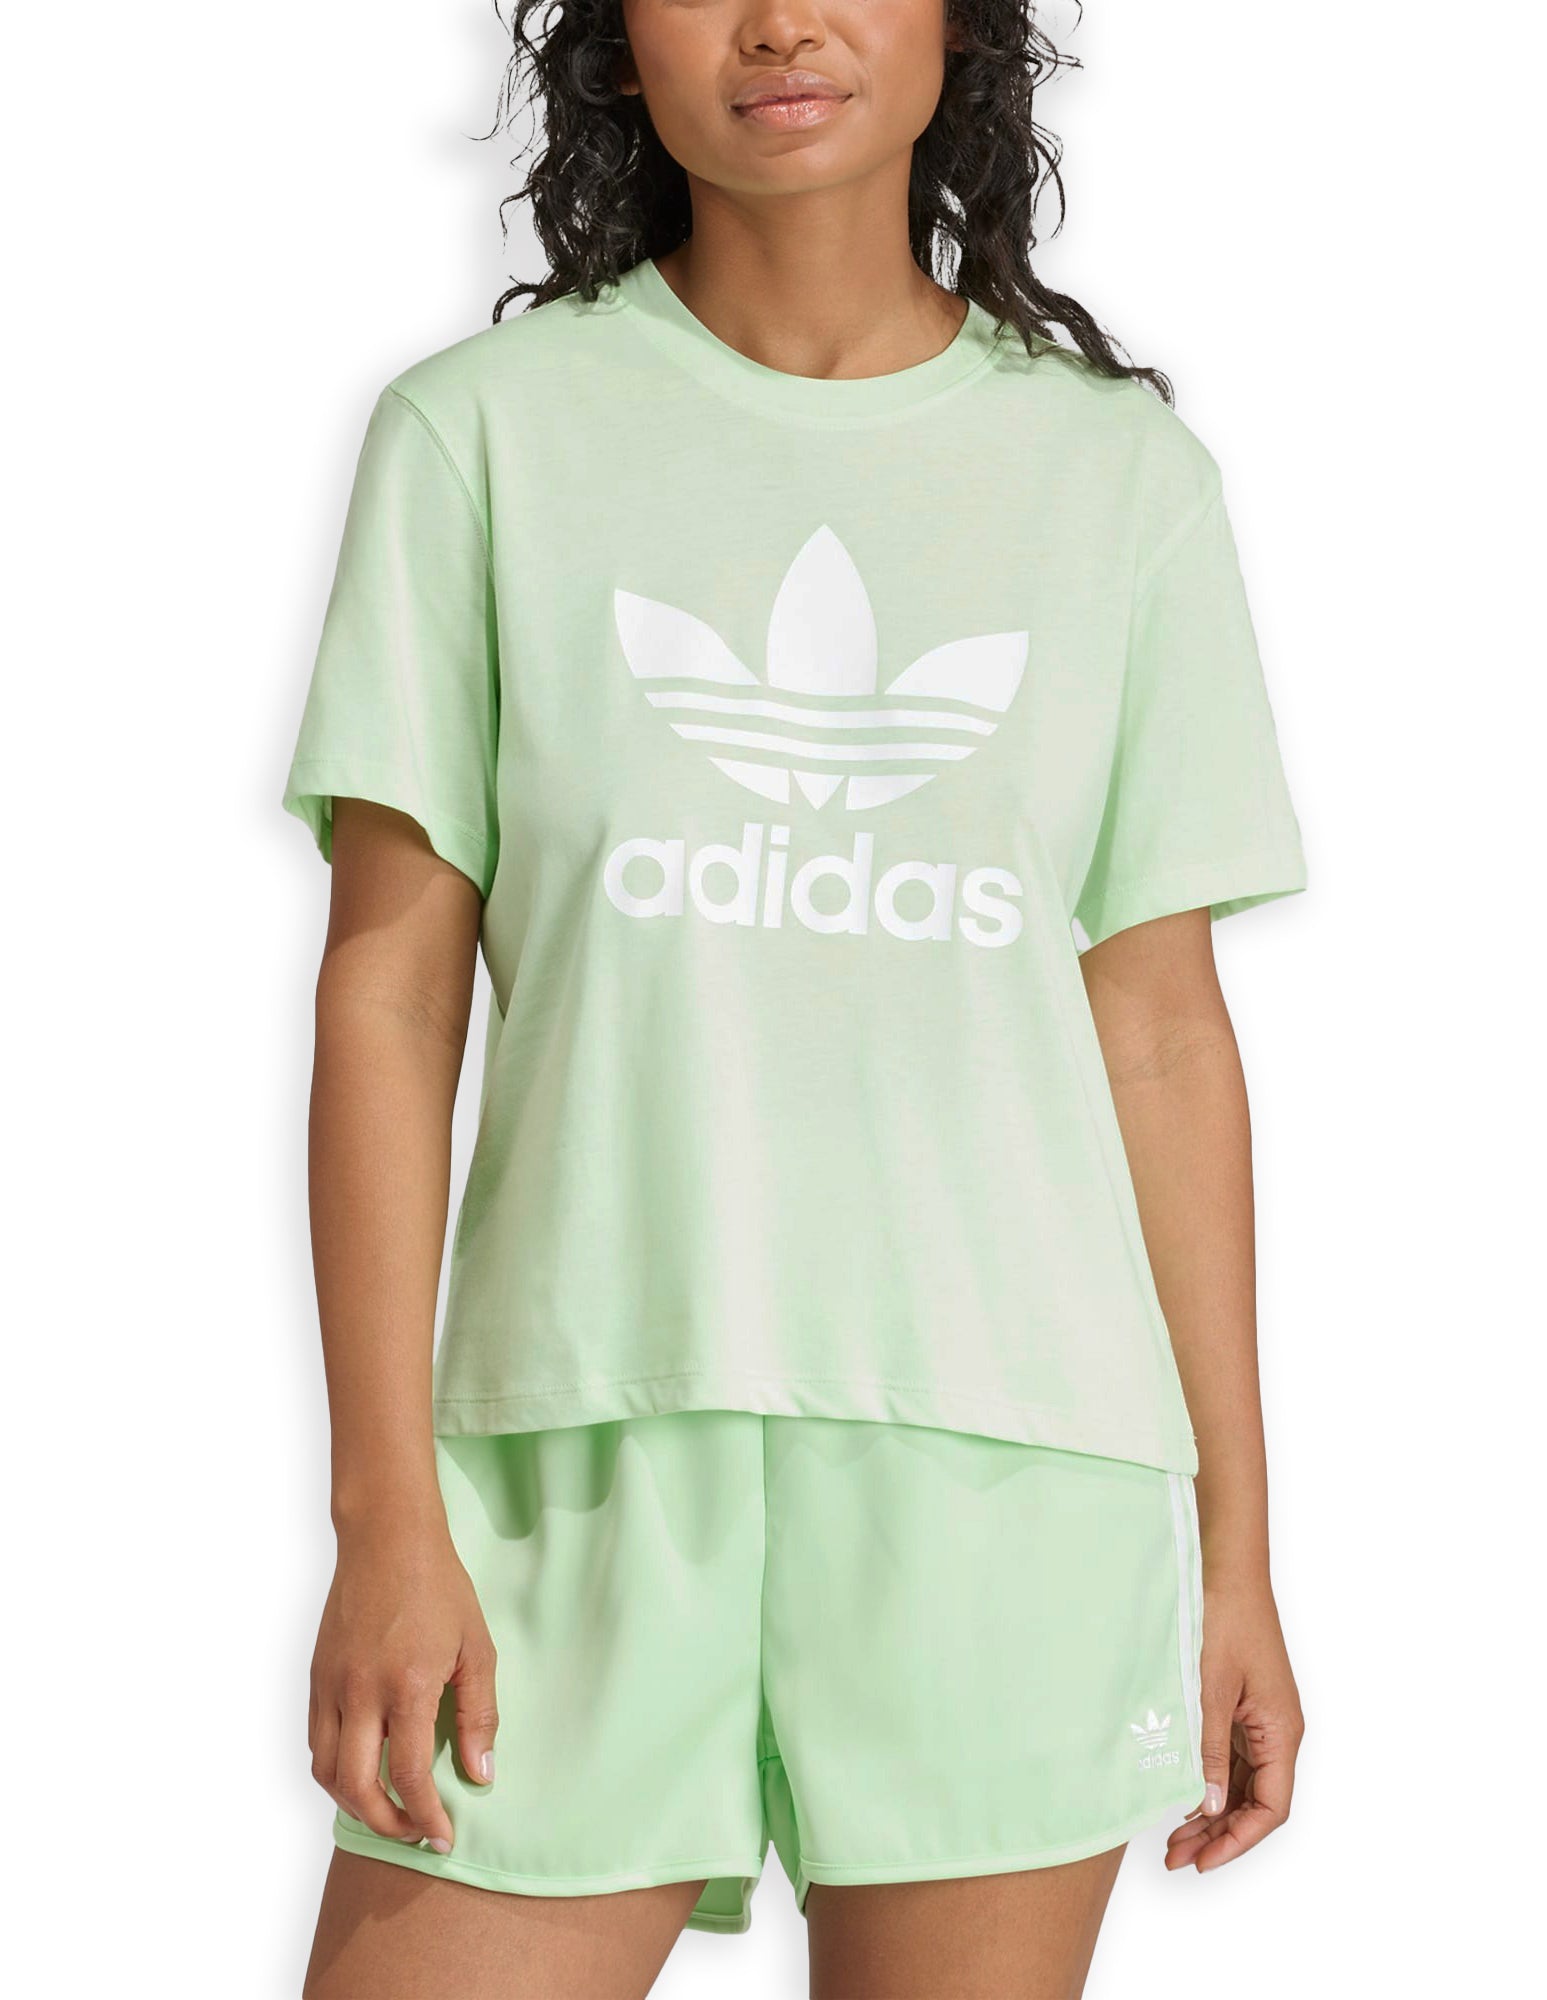 Adidas Trfl Tee Boxy Segrsp Aqua Green Women's T-Shirt